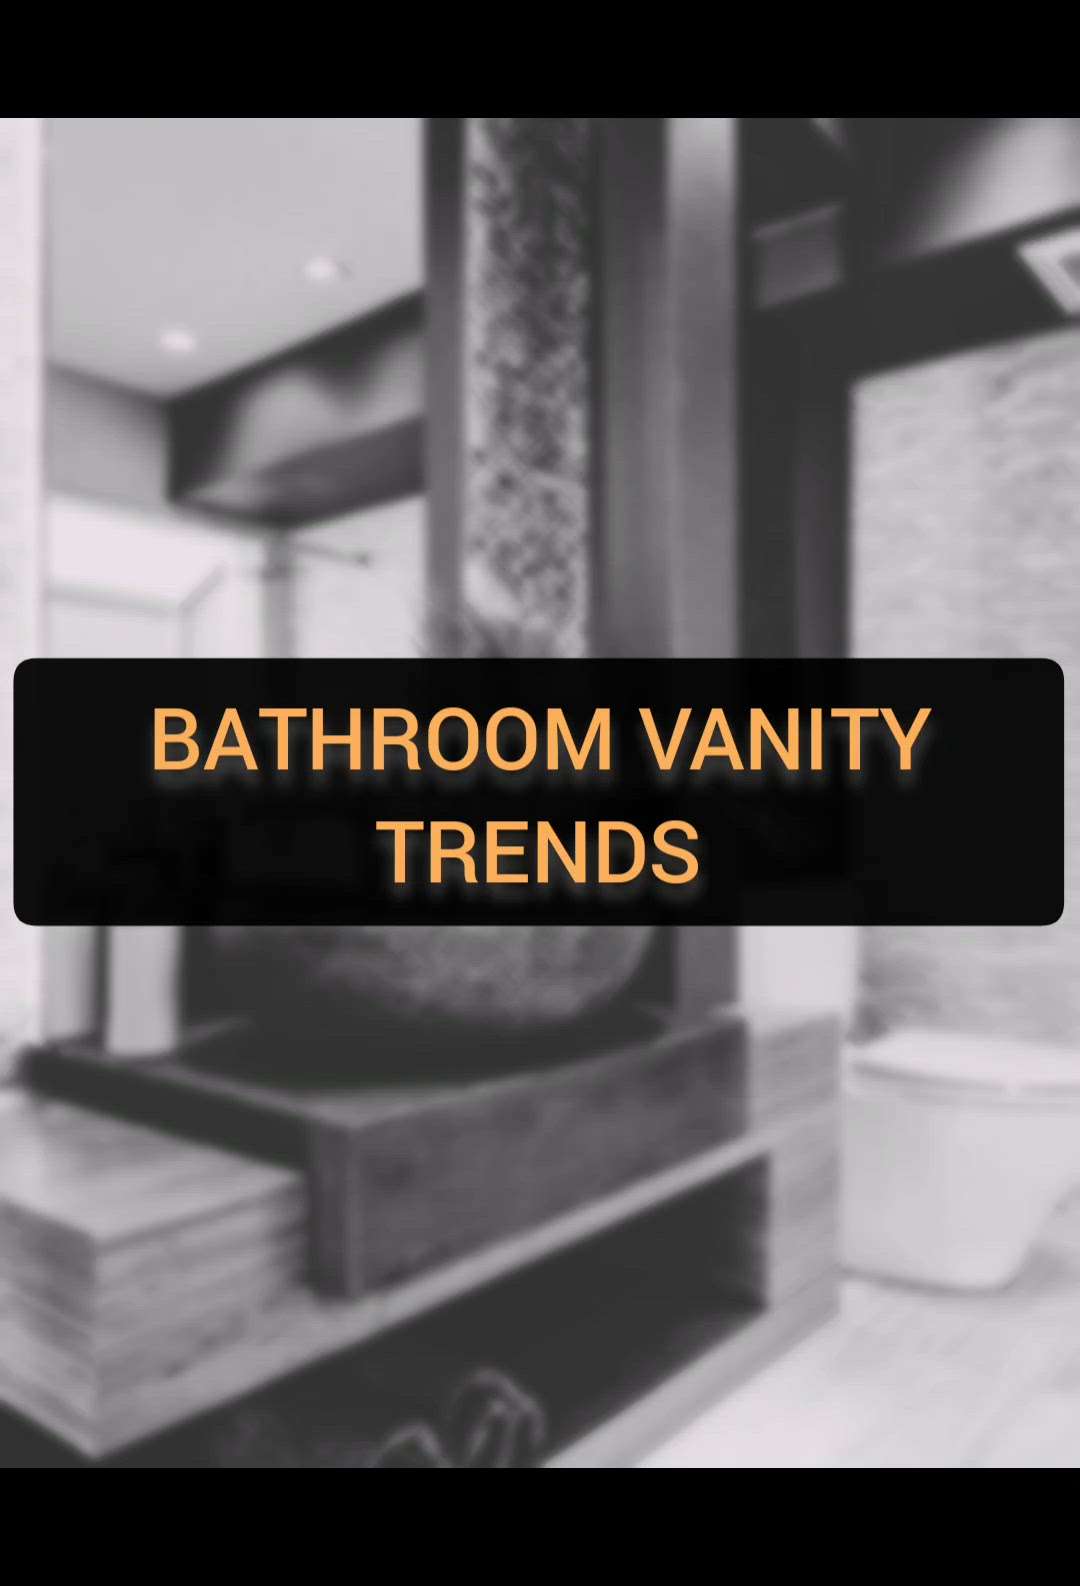 bathroom vanity trends!!
#bathroomvanity #BathroomDesigns #BathroomStorage #BathroomRenovation #BathroomCabinet #BathroomTIles